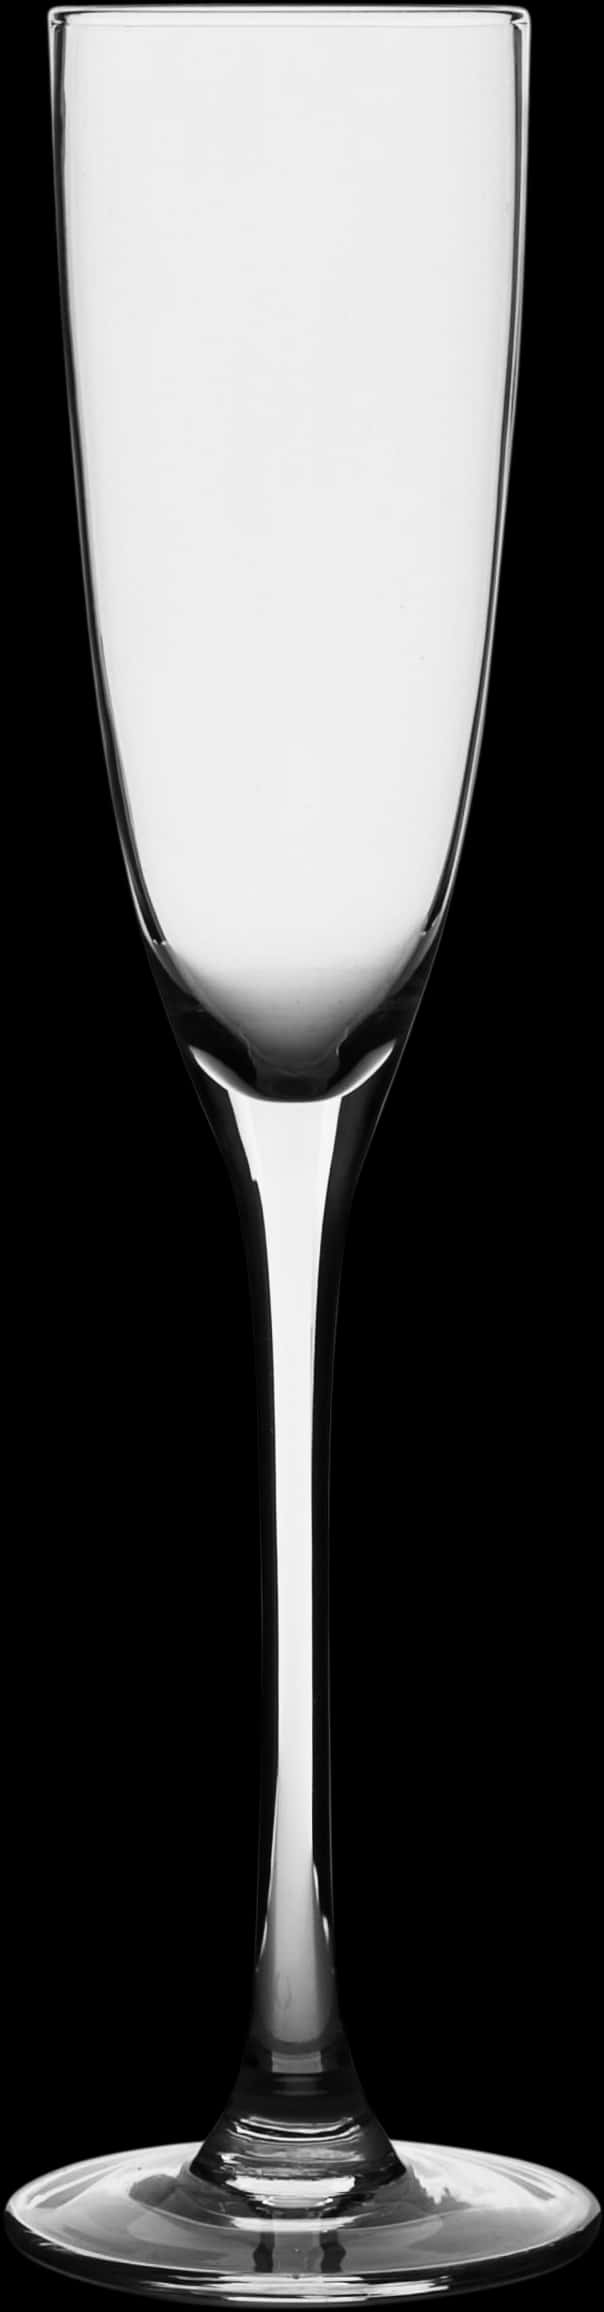 Elegant Empty Wine Glass Black Background PNG